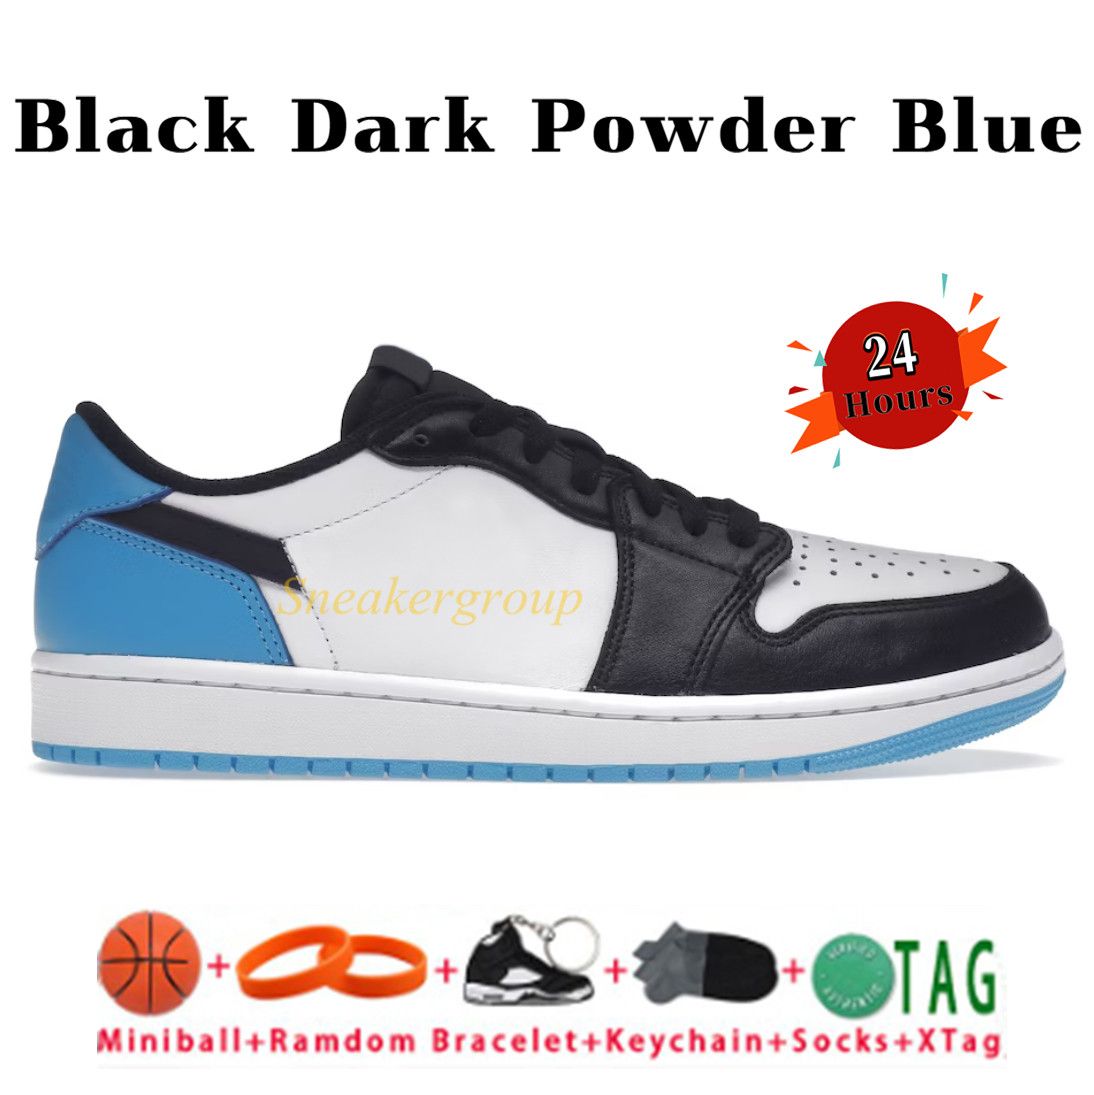 11.Og Black Dark Powder Blue